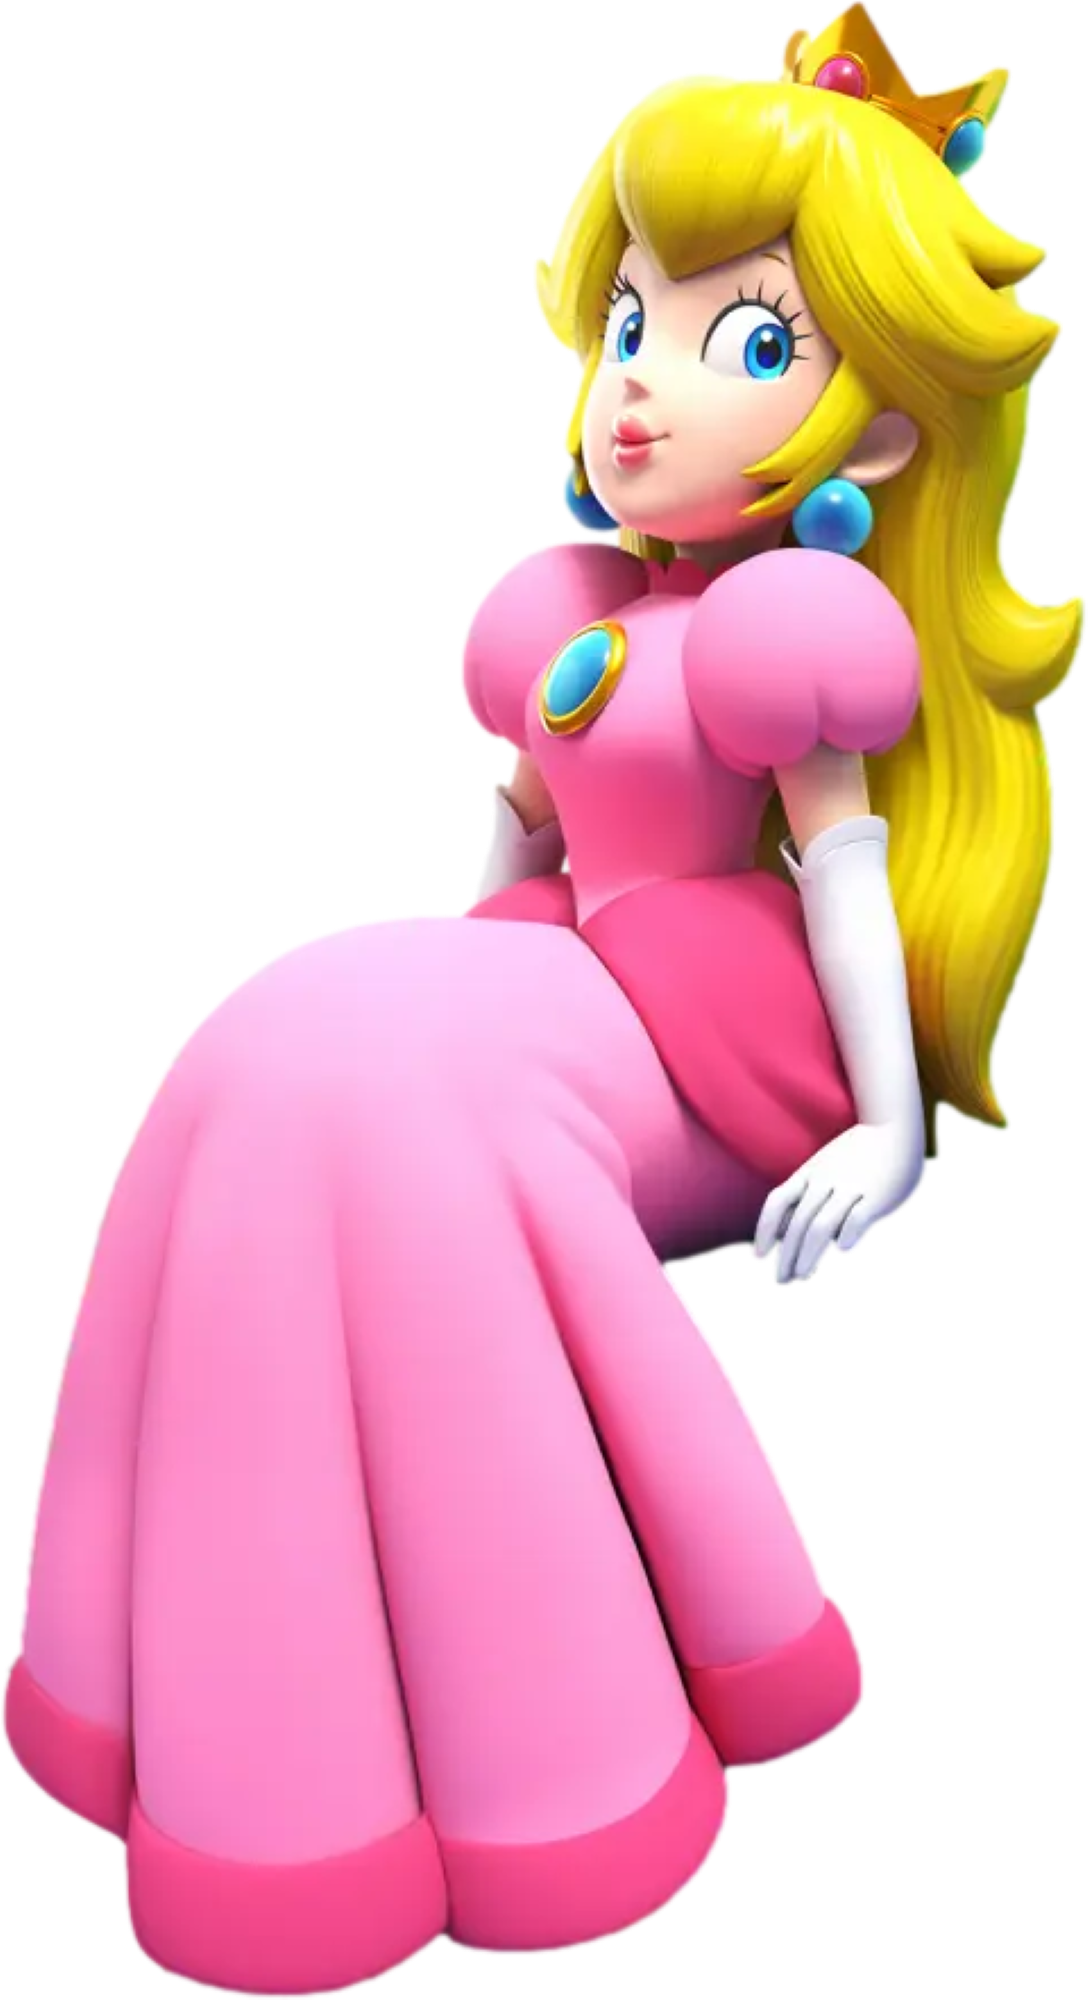 Princess Peach MarioWiki Fandom image picture